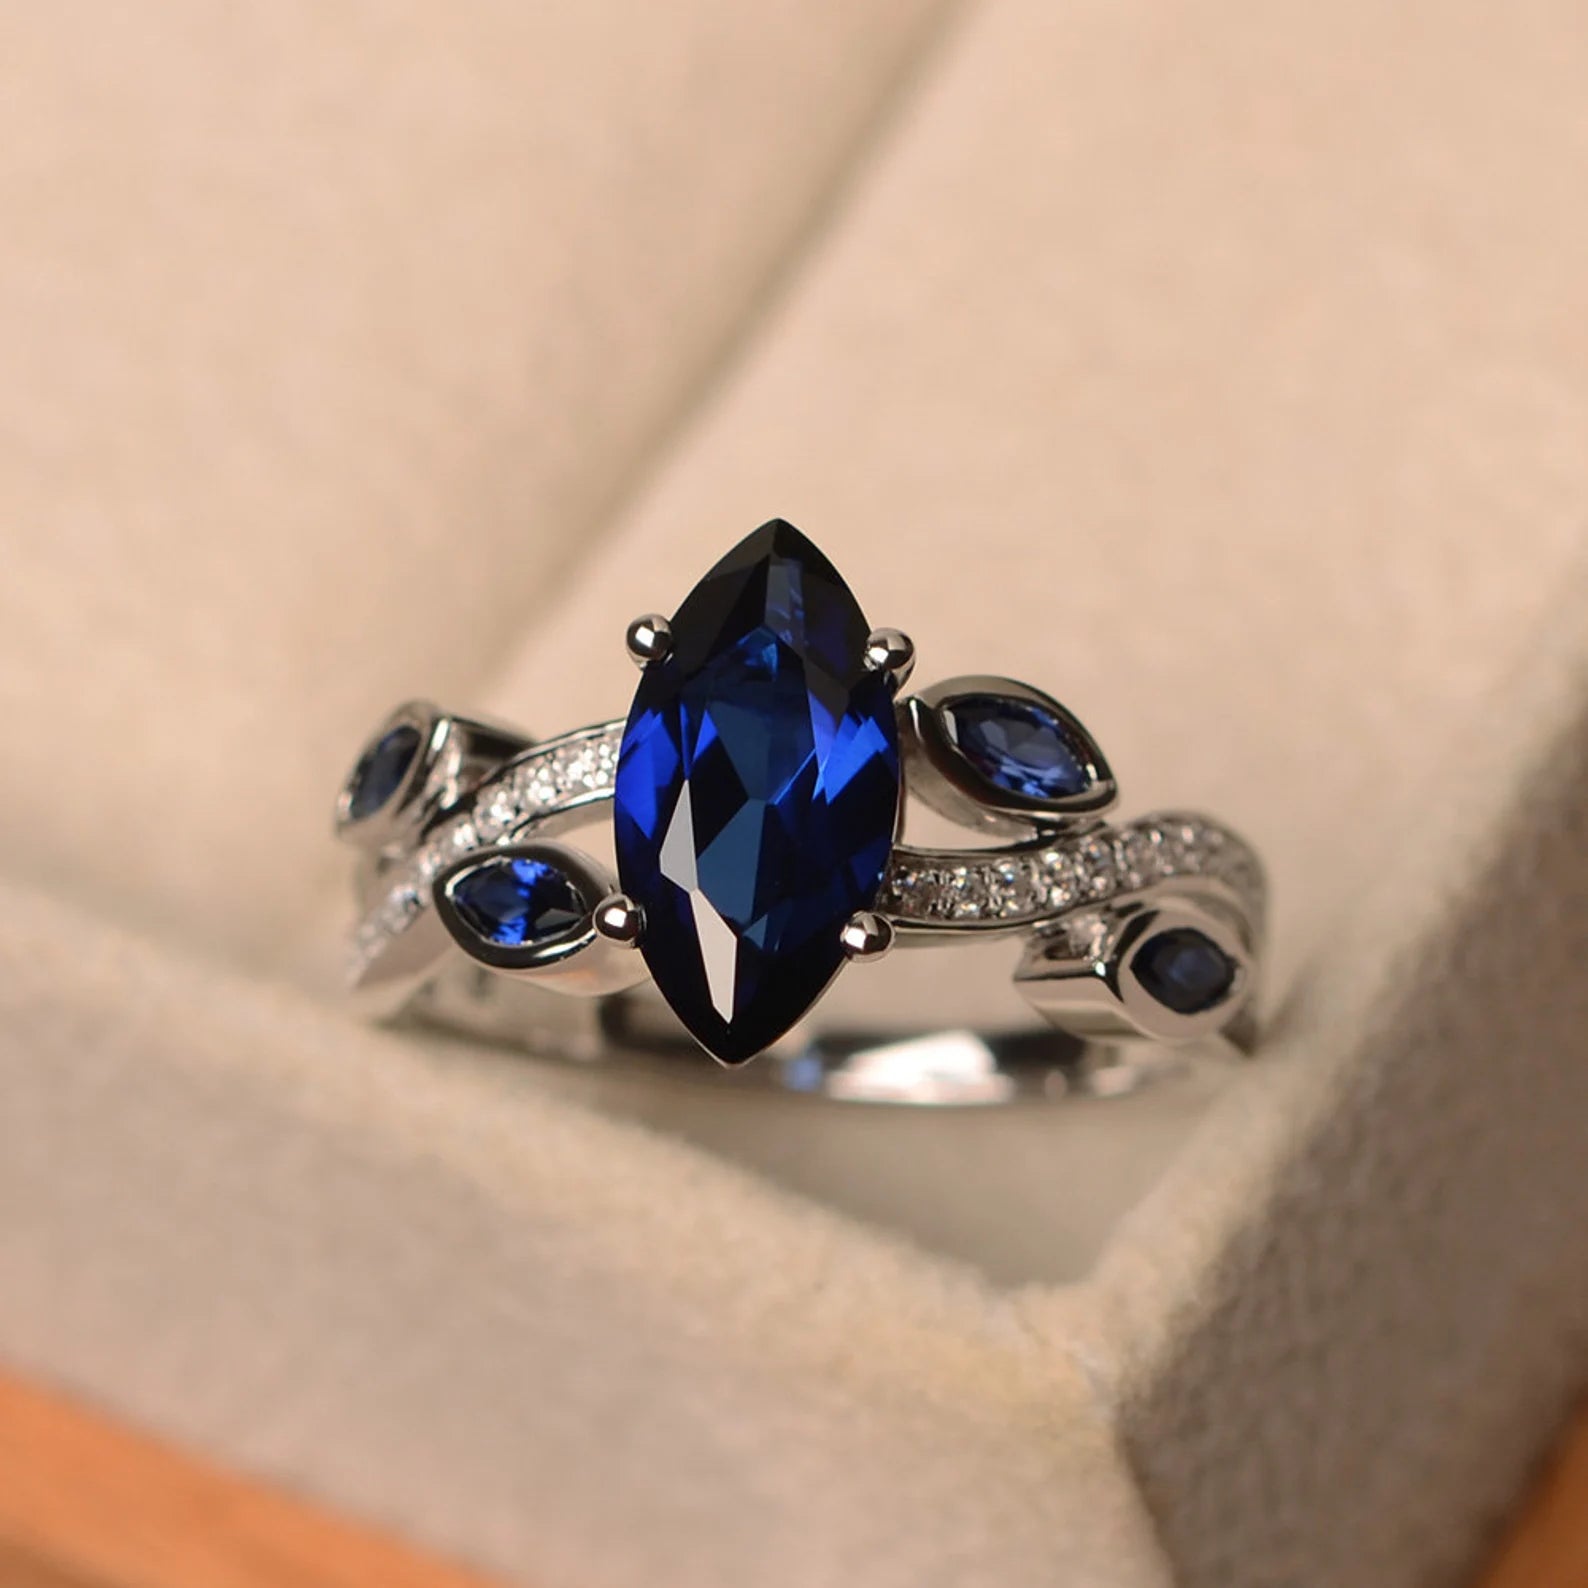 Marquise cut blue sapphire stone ring